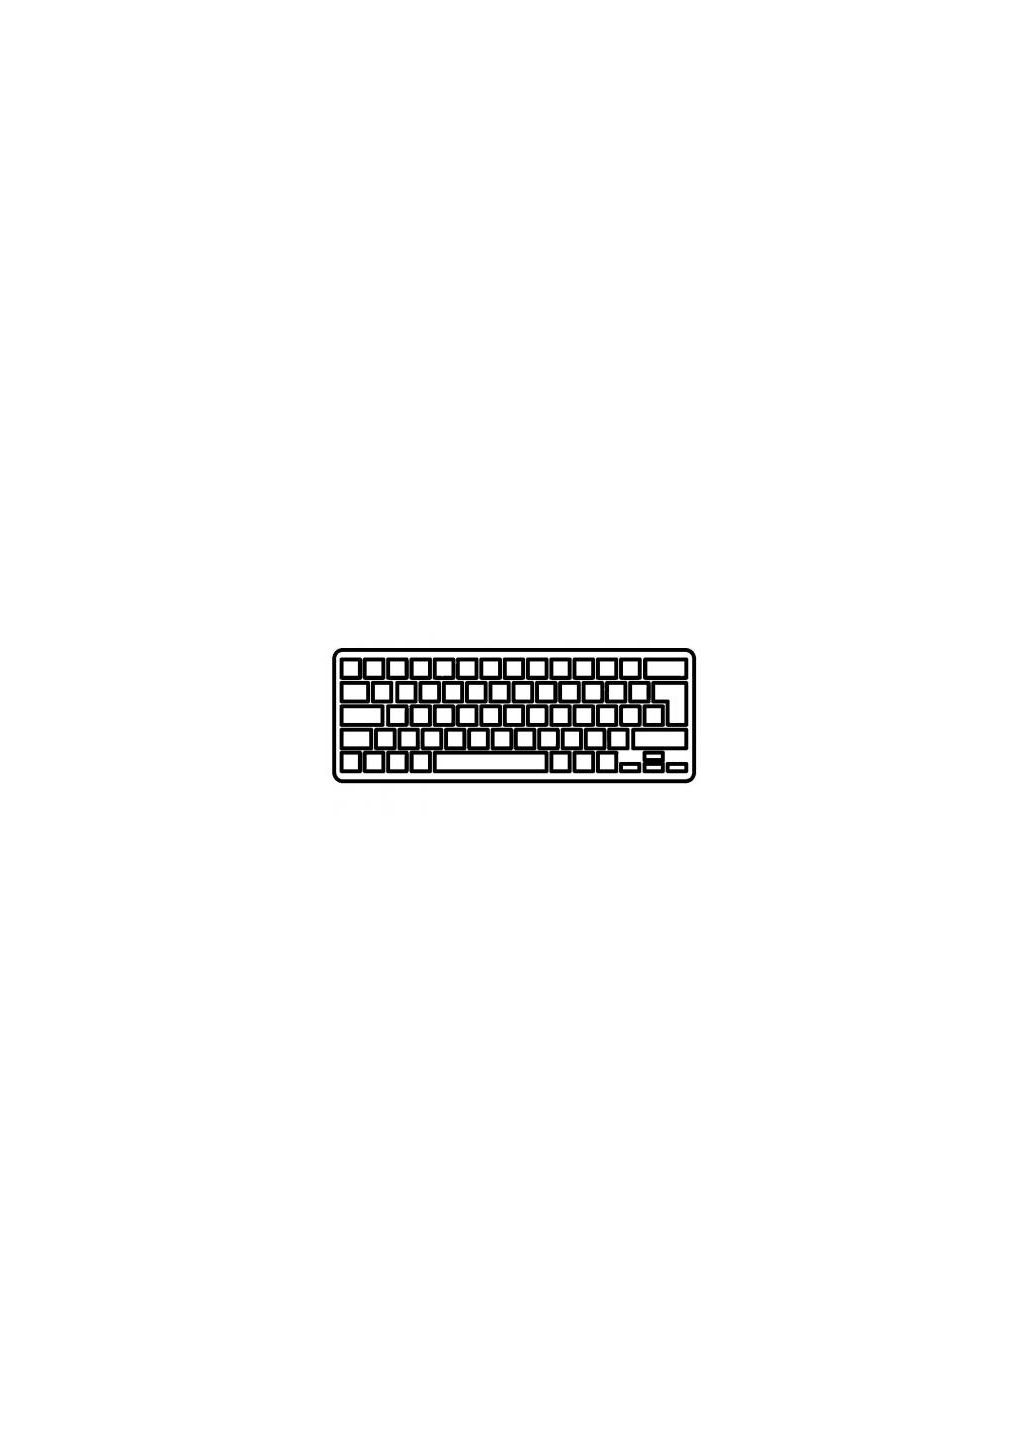 Клавиатура ноутбука (A43197) Dell vostro 3300/3400/3500 series черная ua (276708028)